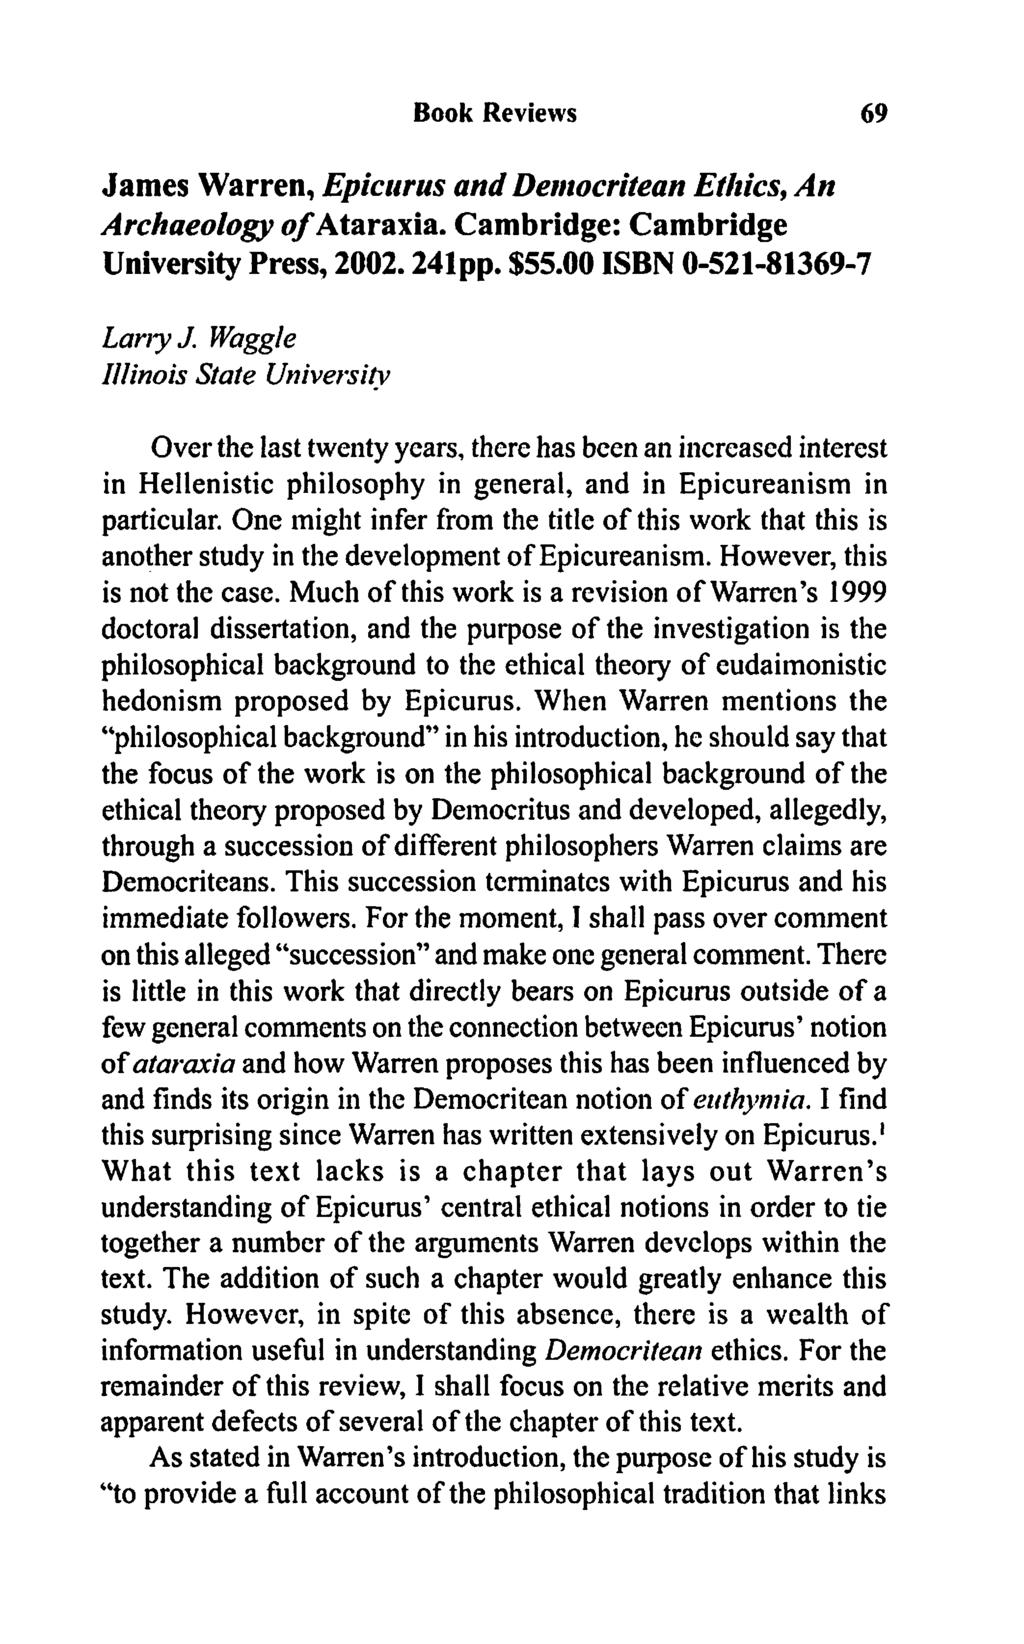 Book Reviews 69 James Warren, Epicurus and Democritean Ethics, An Archaeology of Ataraxia. Cambridge: Cambridge University Press, 2002.241pp. $55.00 ISBN 0-521-81369-7 LariyJ.